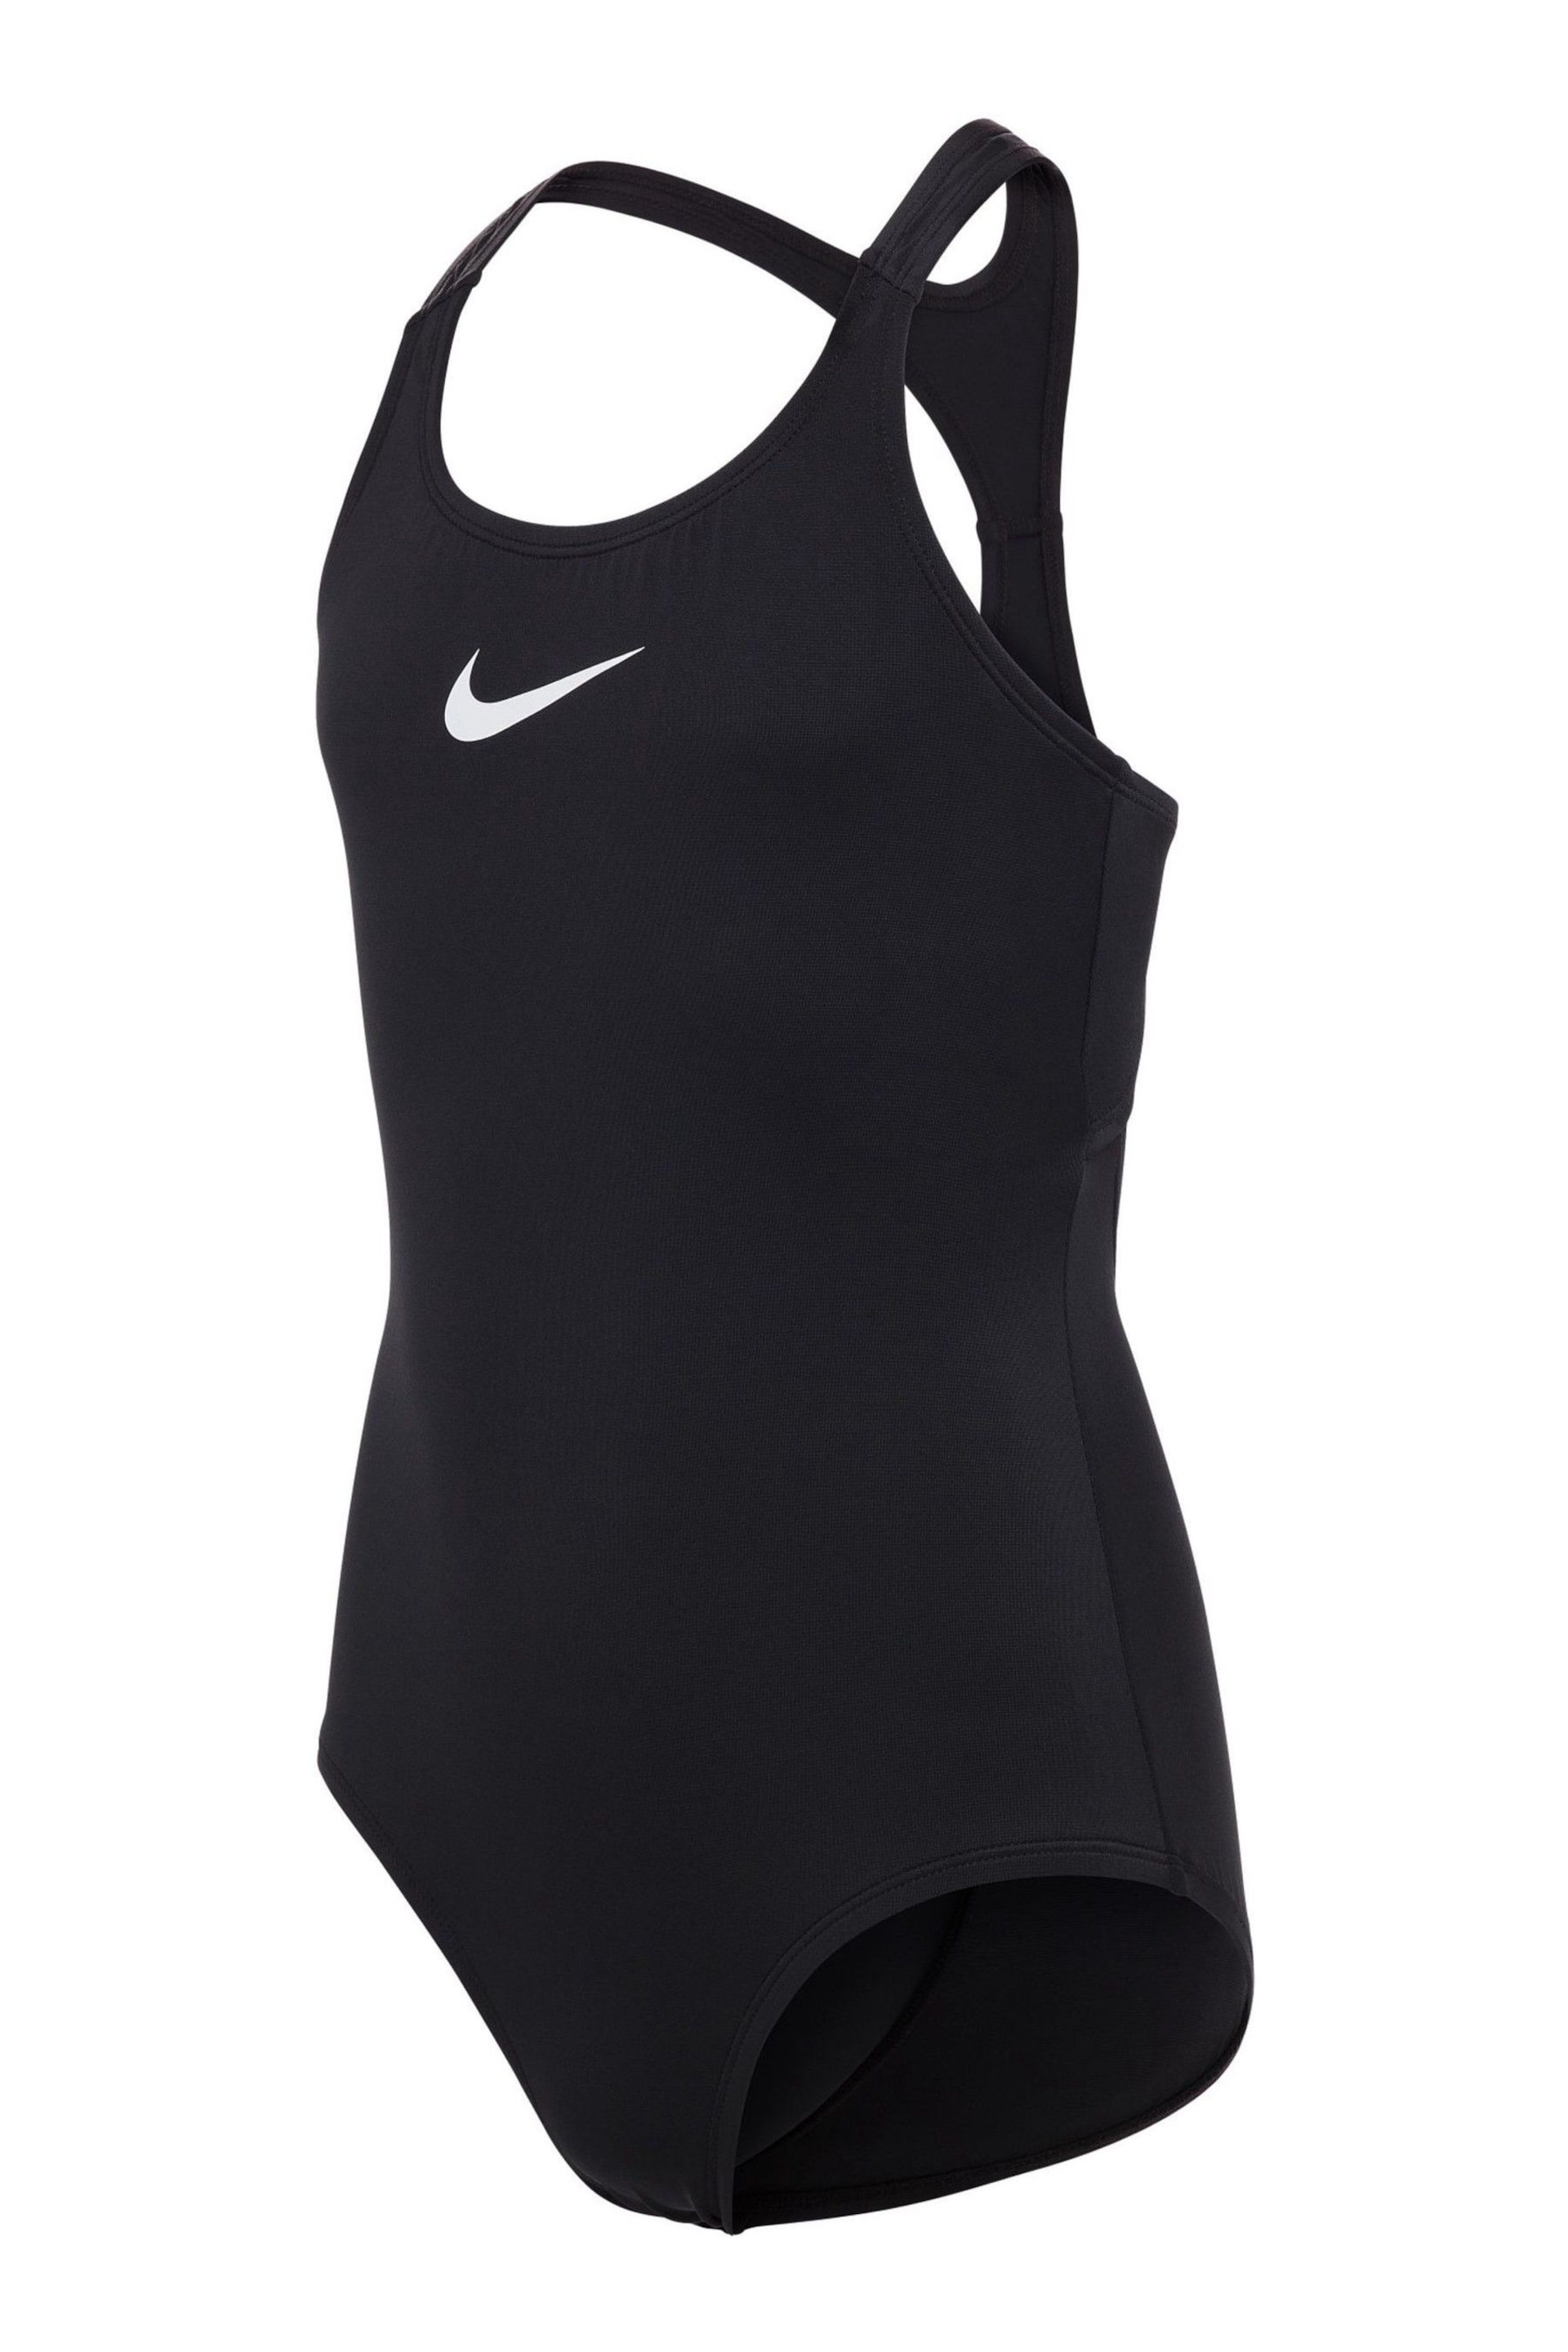 Nike Black Essential Racerback Swimsuit - Image 2 of 3